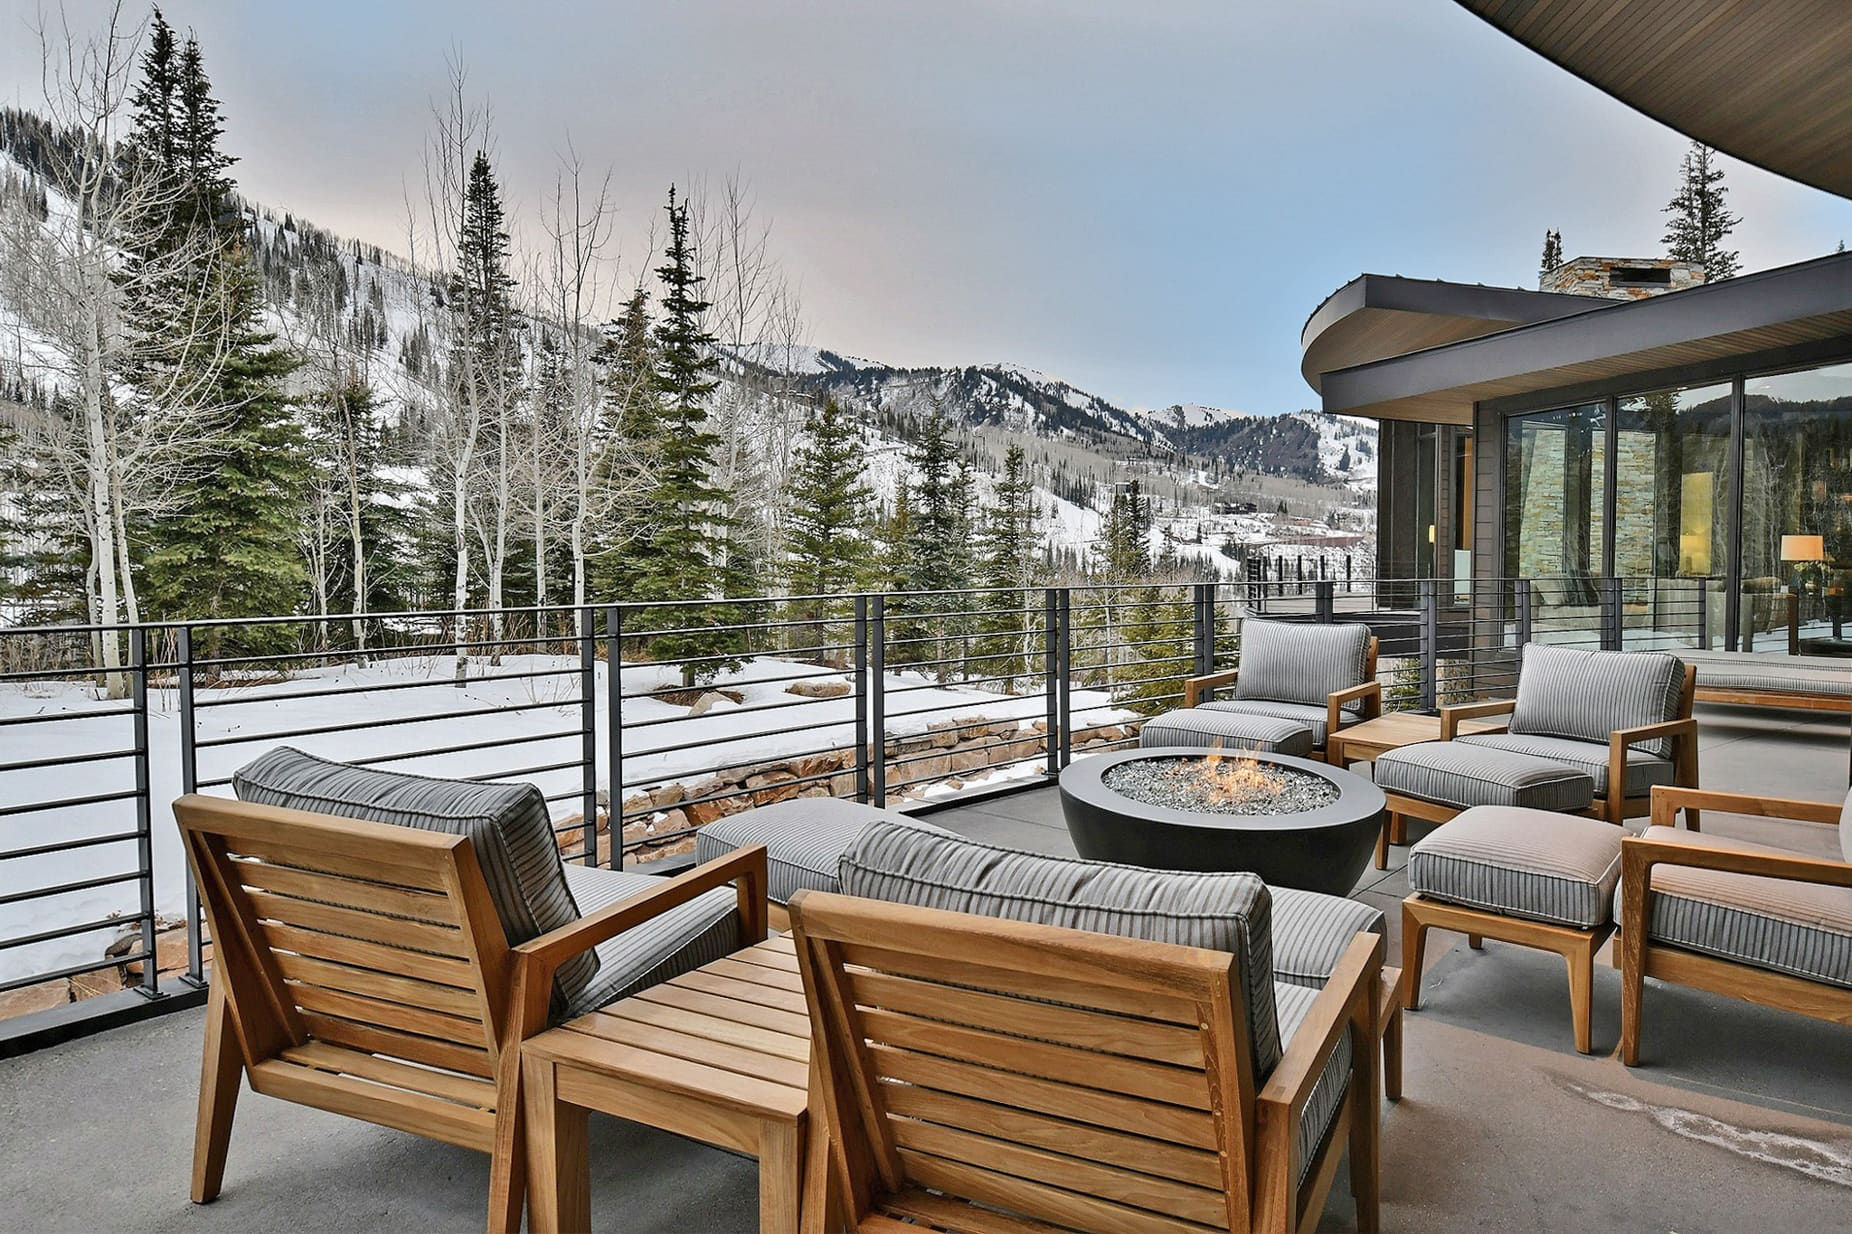 Mountain outdoor deck with fireplace during ski season